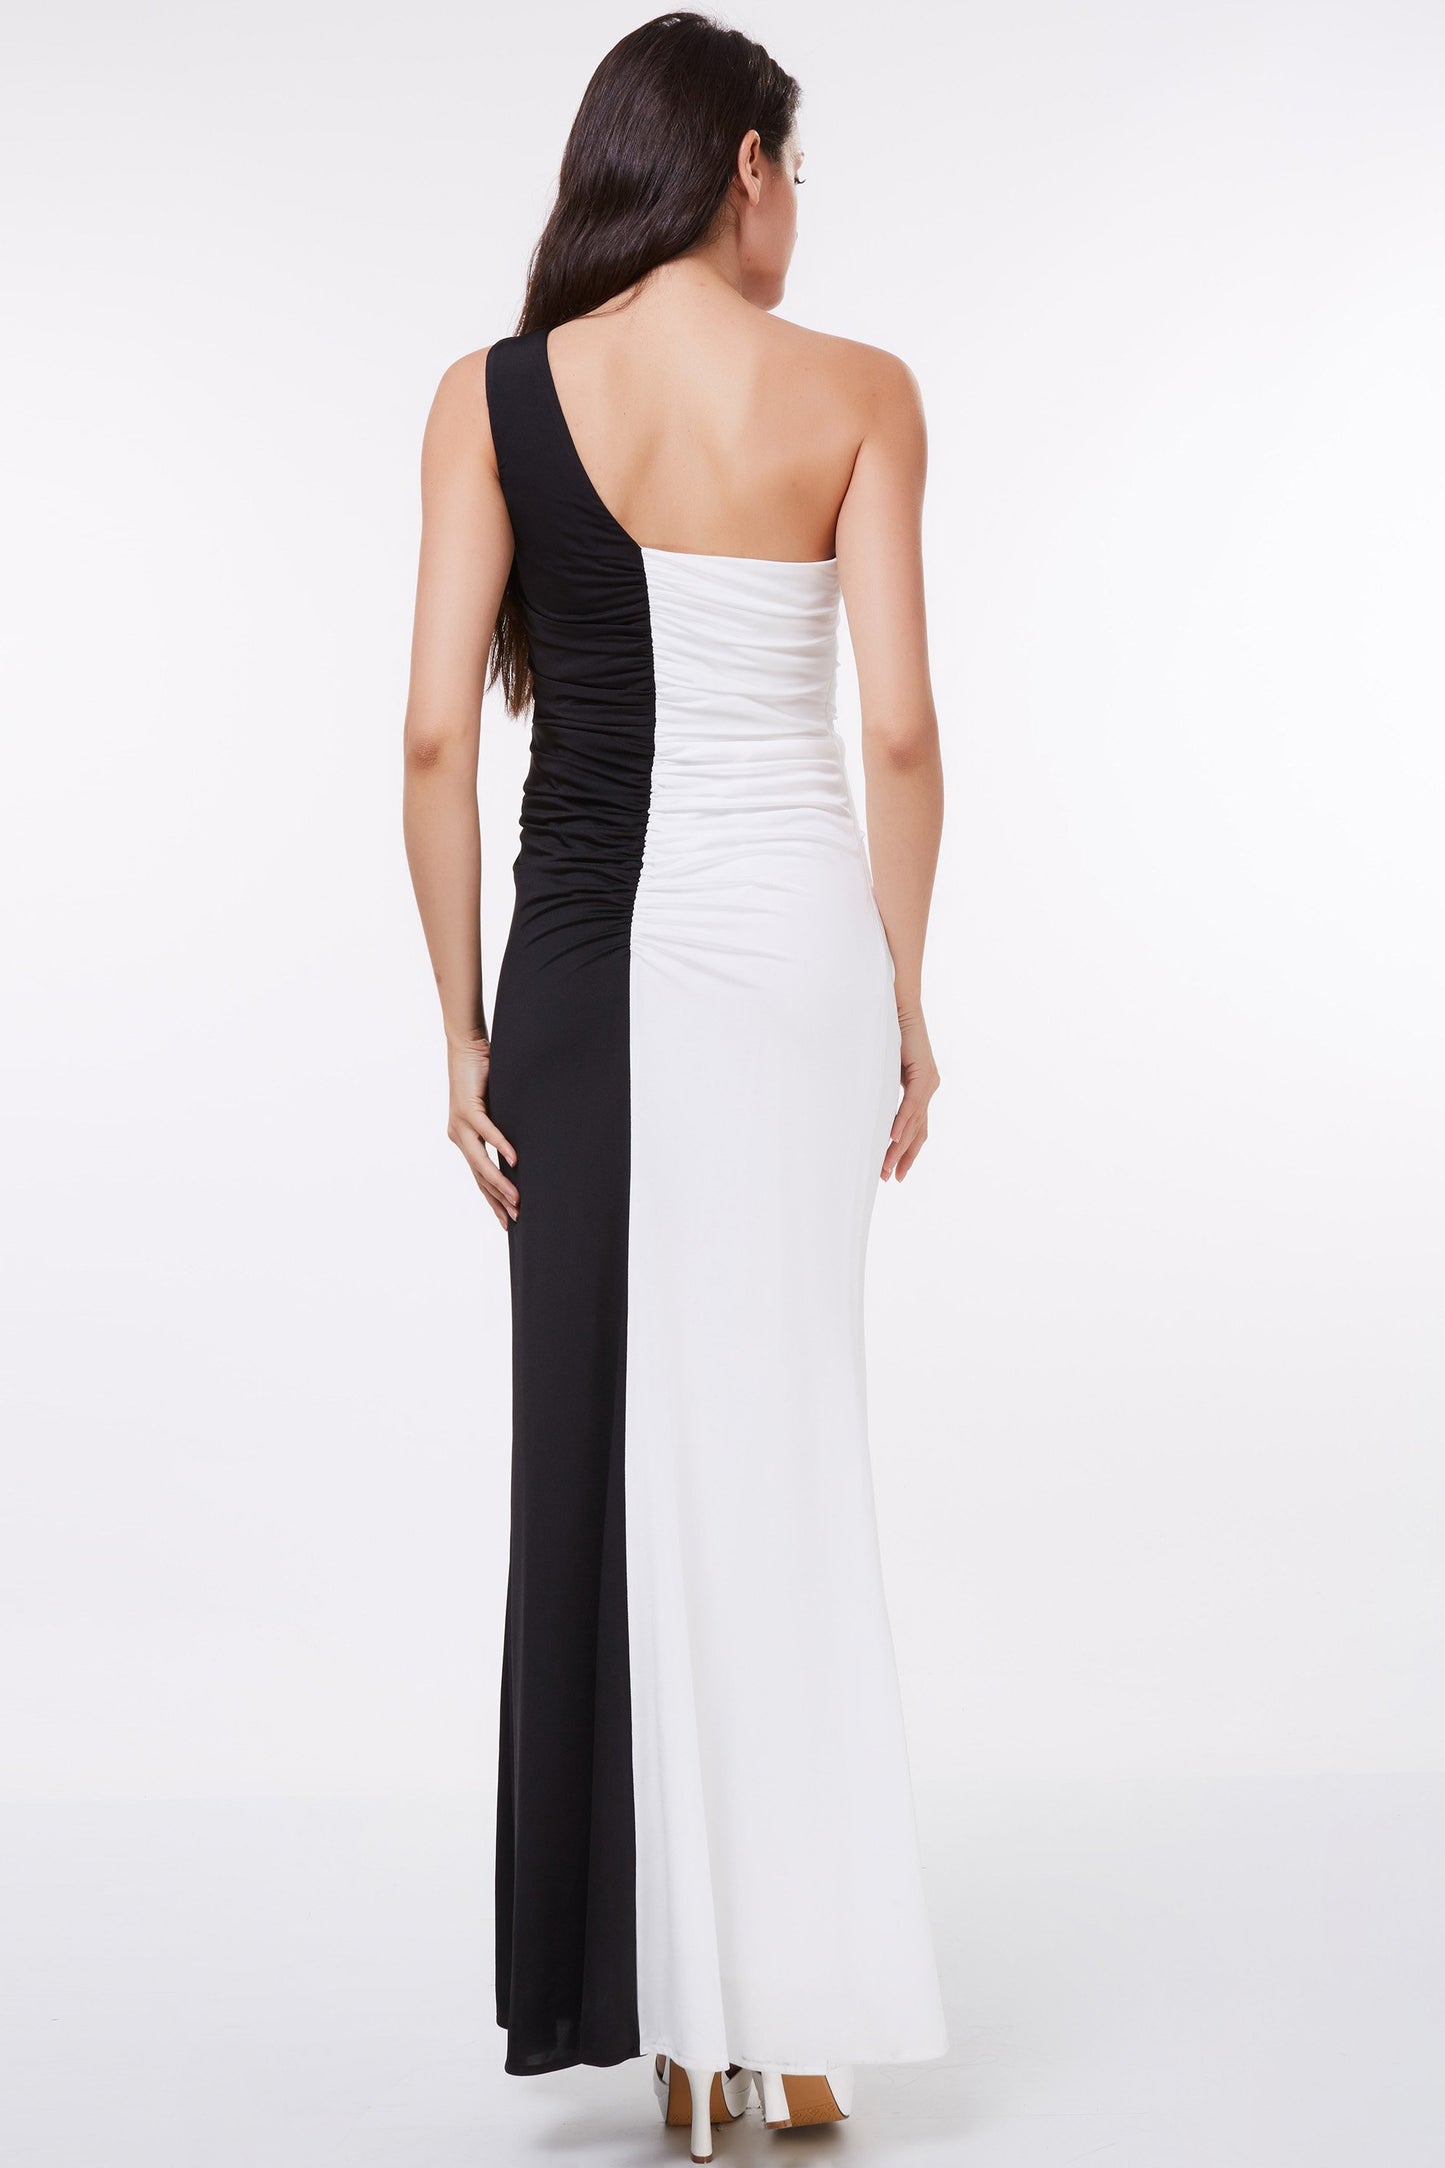 Mermaid Long Black and White Floor Length One Shoulder Beads Ruffles Prom Dresses WK265